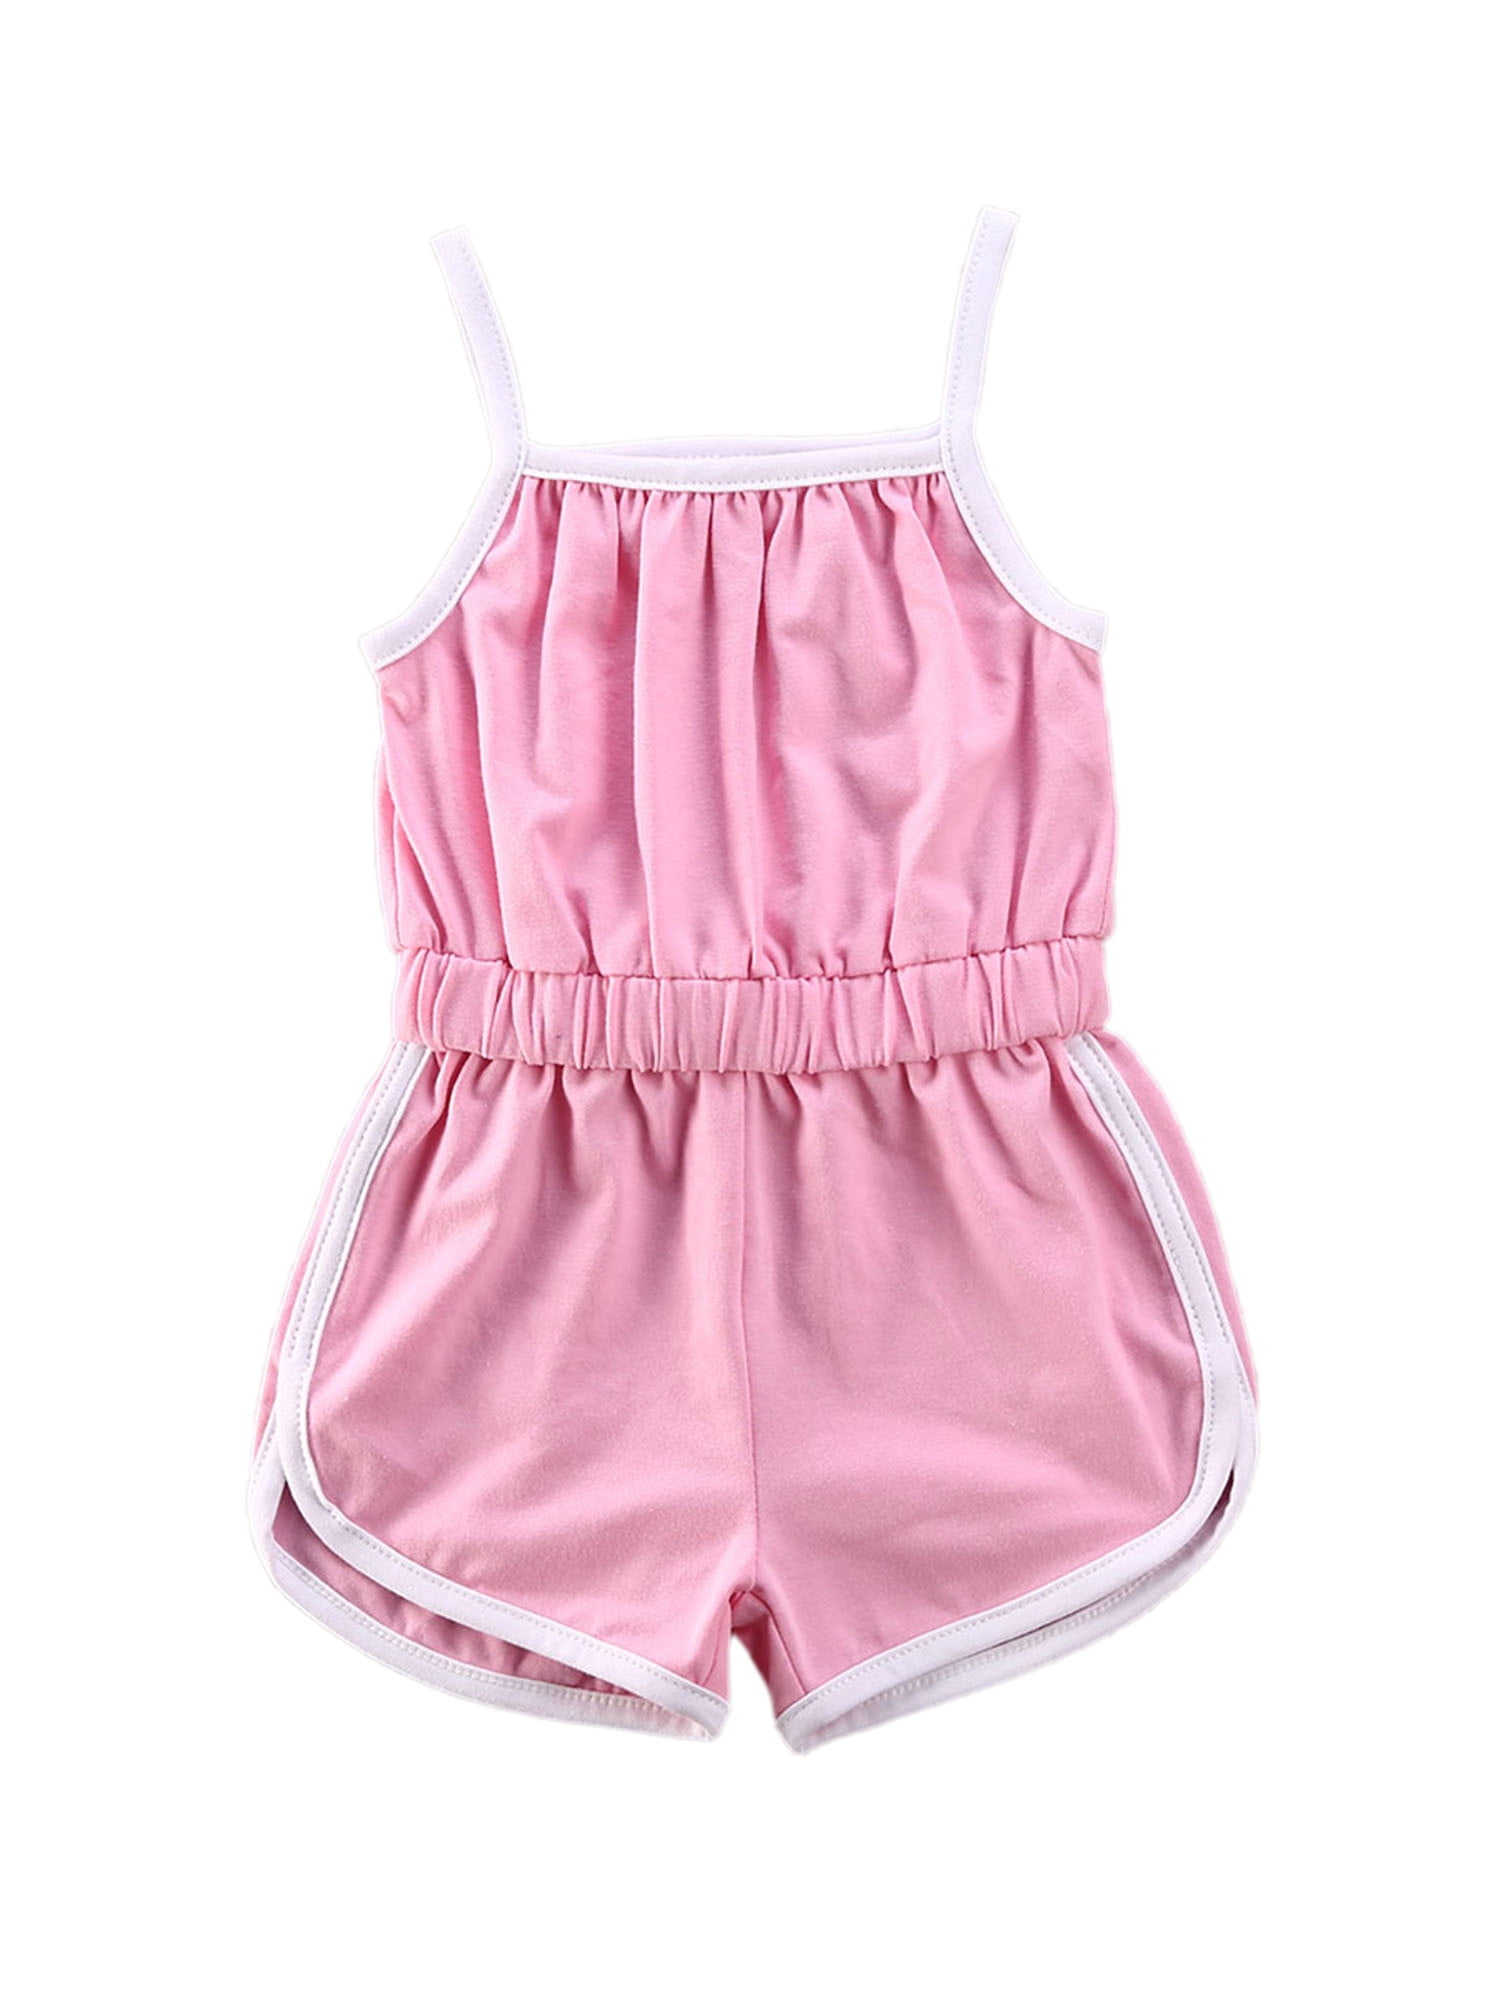 pink short overalls